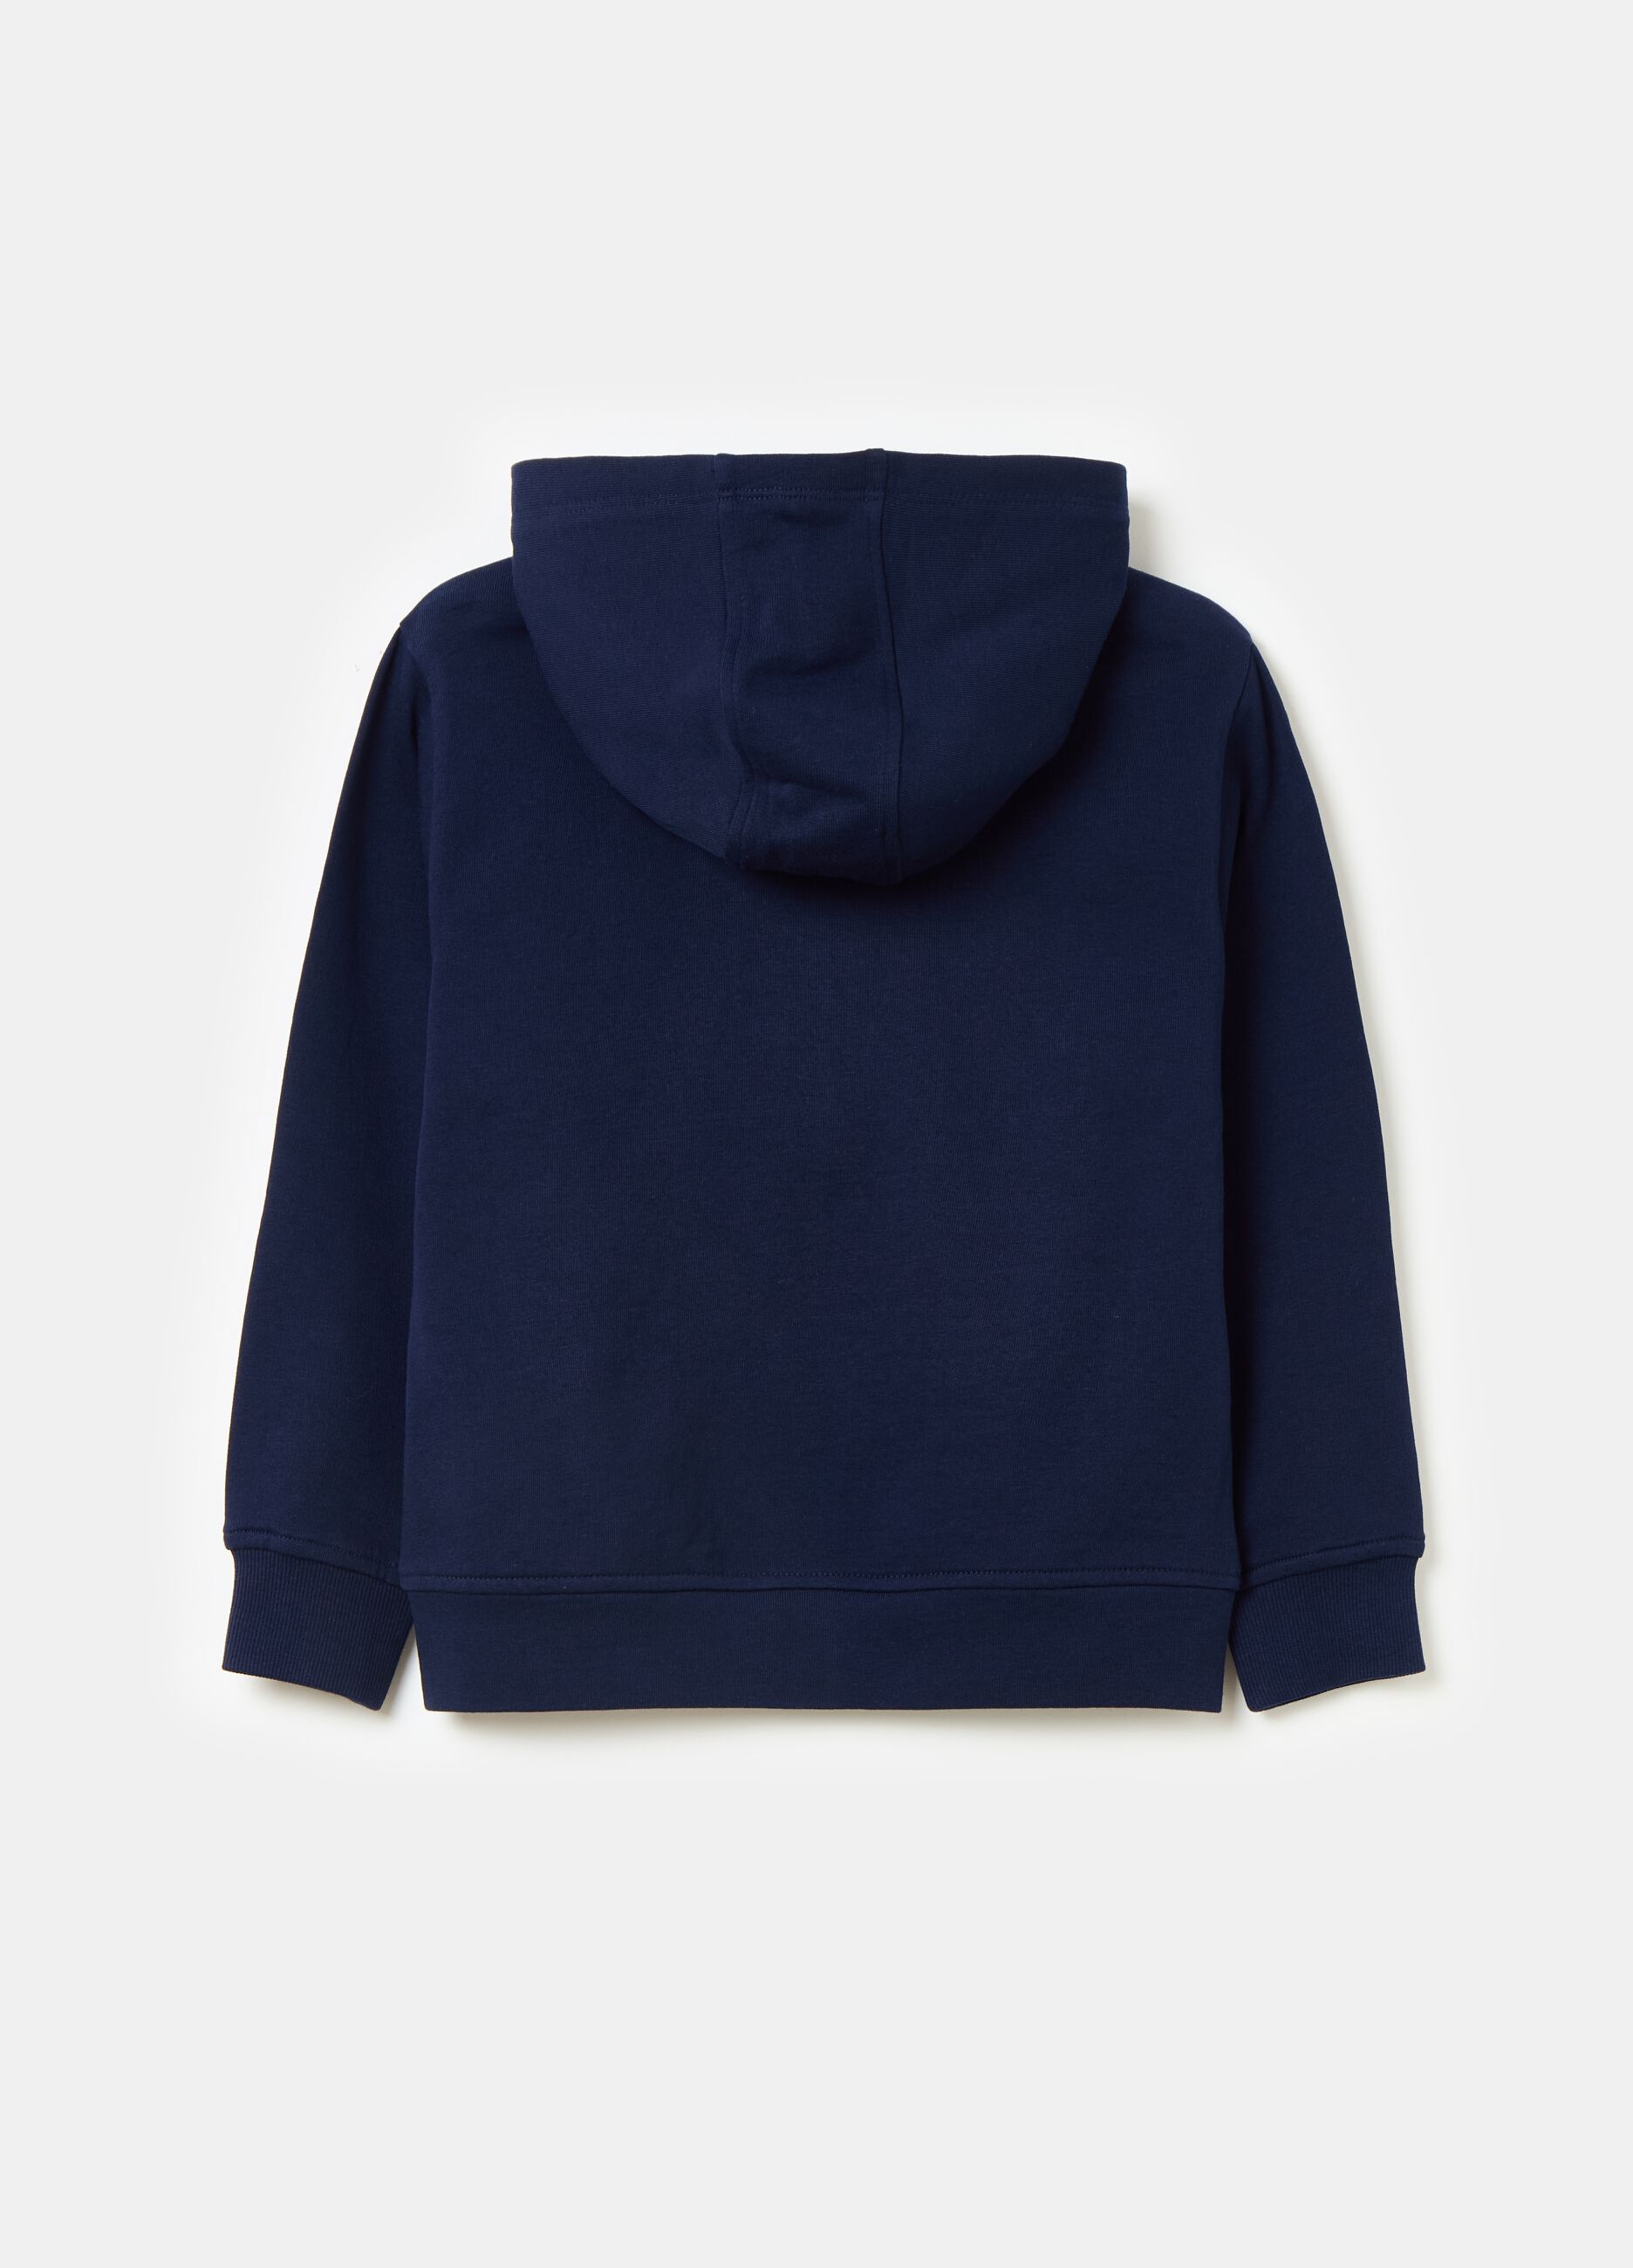 French terry full-zip hoodie